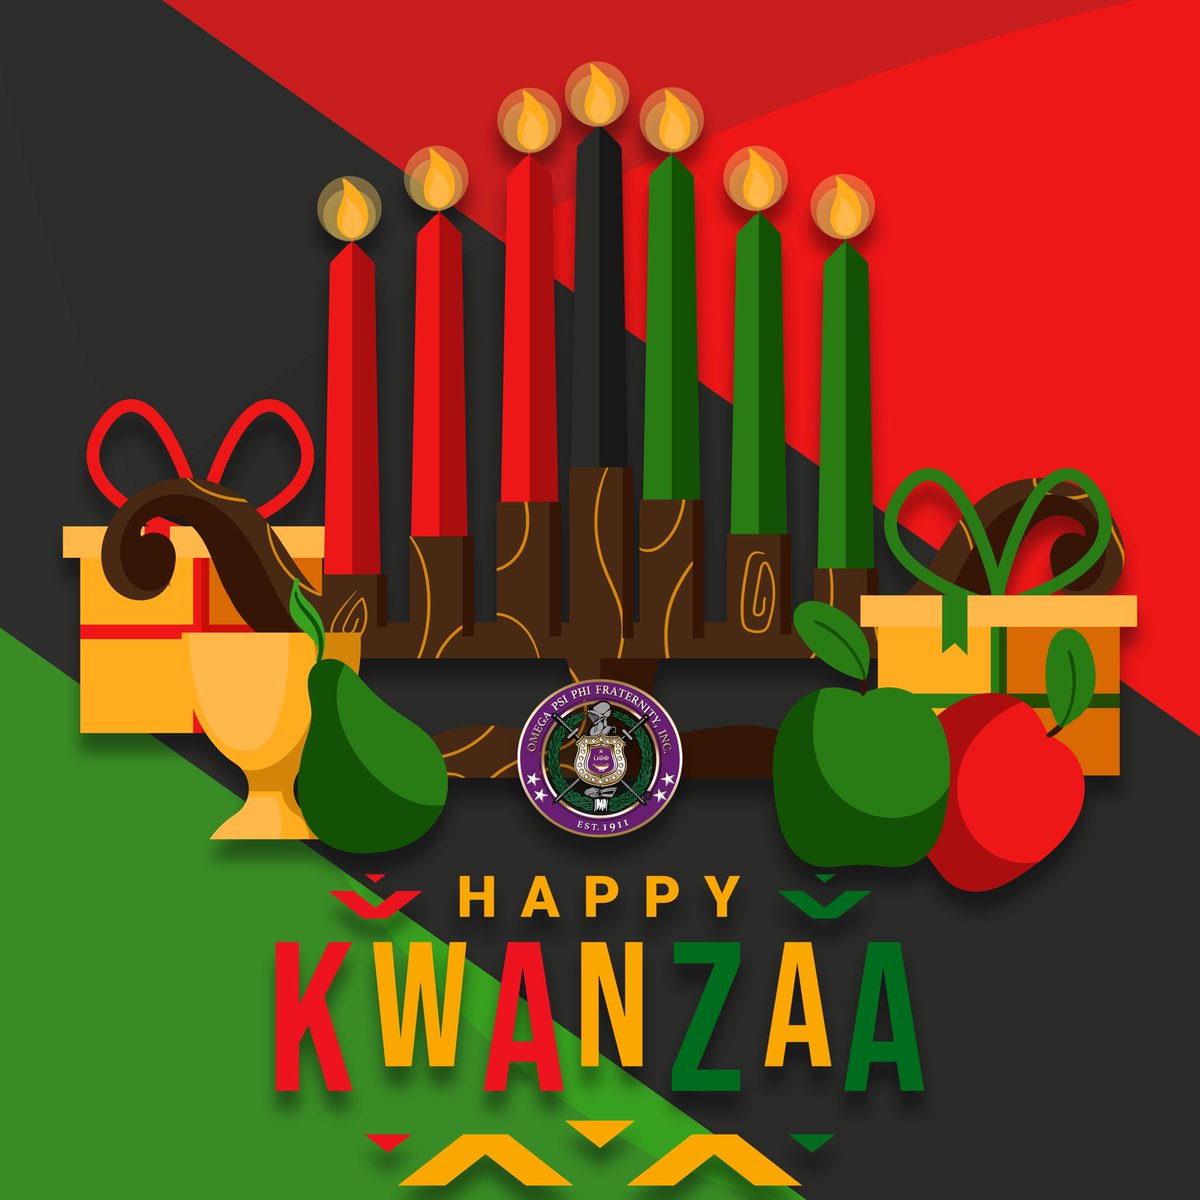 Happy Kwanzaa, from the Men of Omega Psi Phi, Fraternity, Inc. During this time of celebration; Let us reflect upon and celebrate the principles of: Umoja, Kujichagulia, Ujima, Ujamaa, Nia, Kuumba, Imani